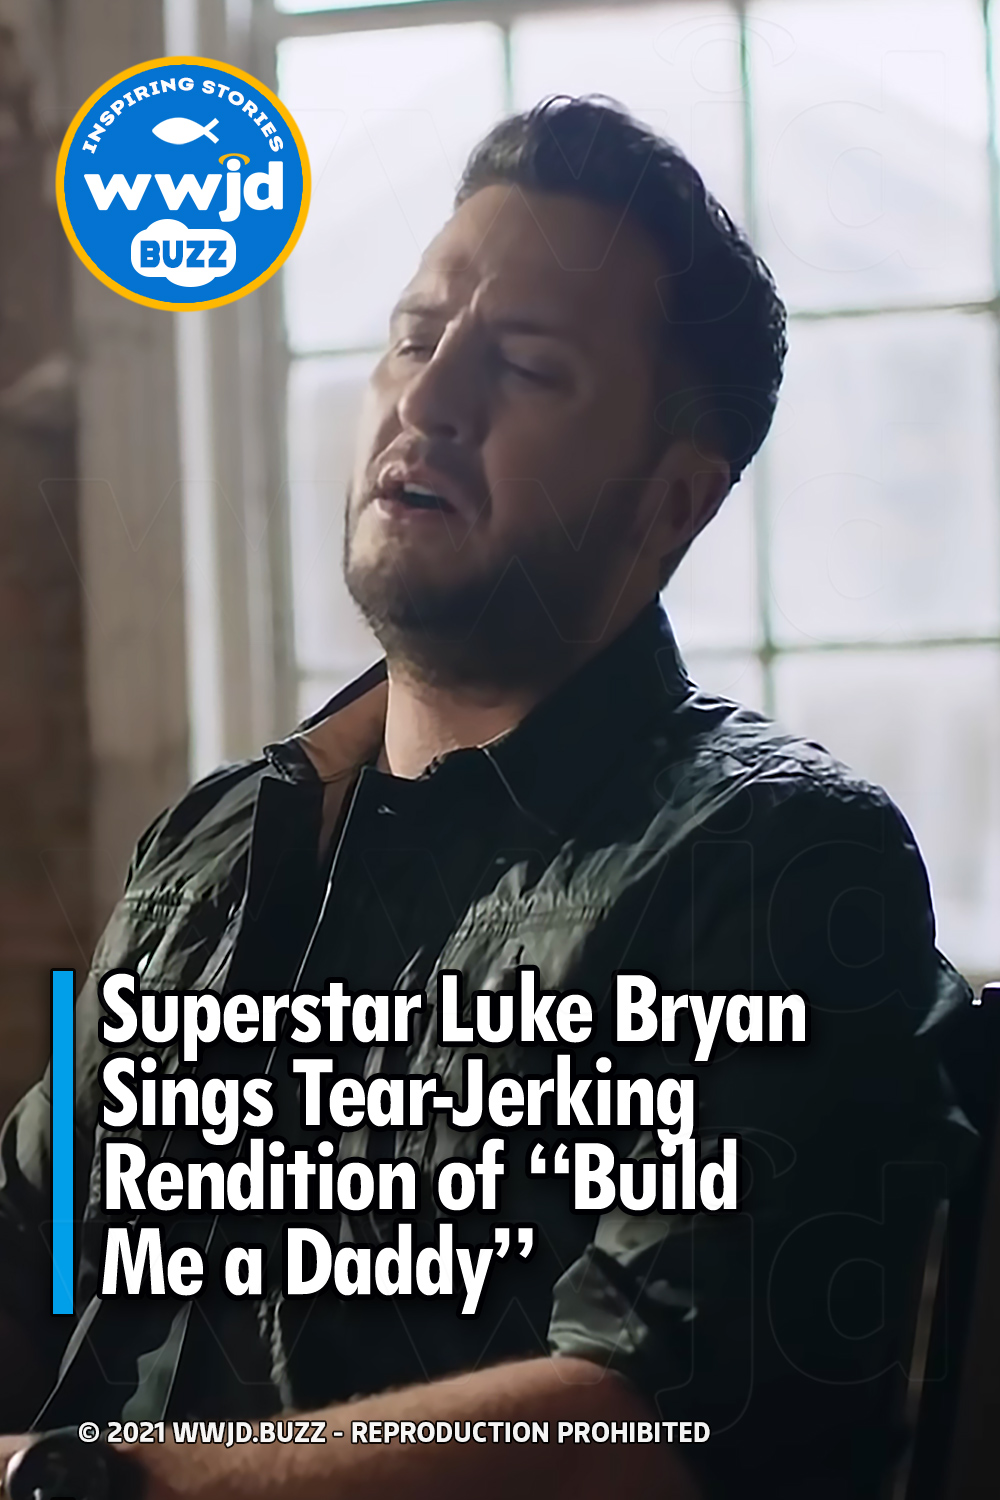 Superstar Luke Bryan Sings Tear-Jerking Rendition of “Build Me a Daddy”